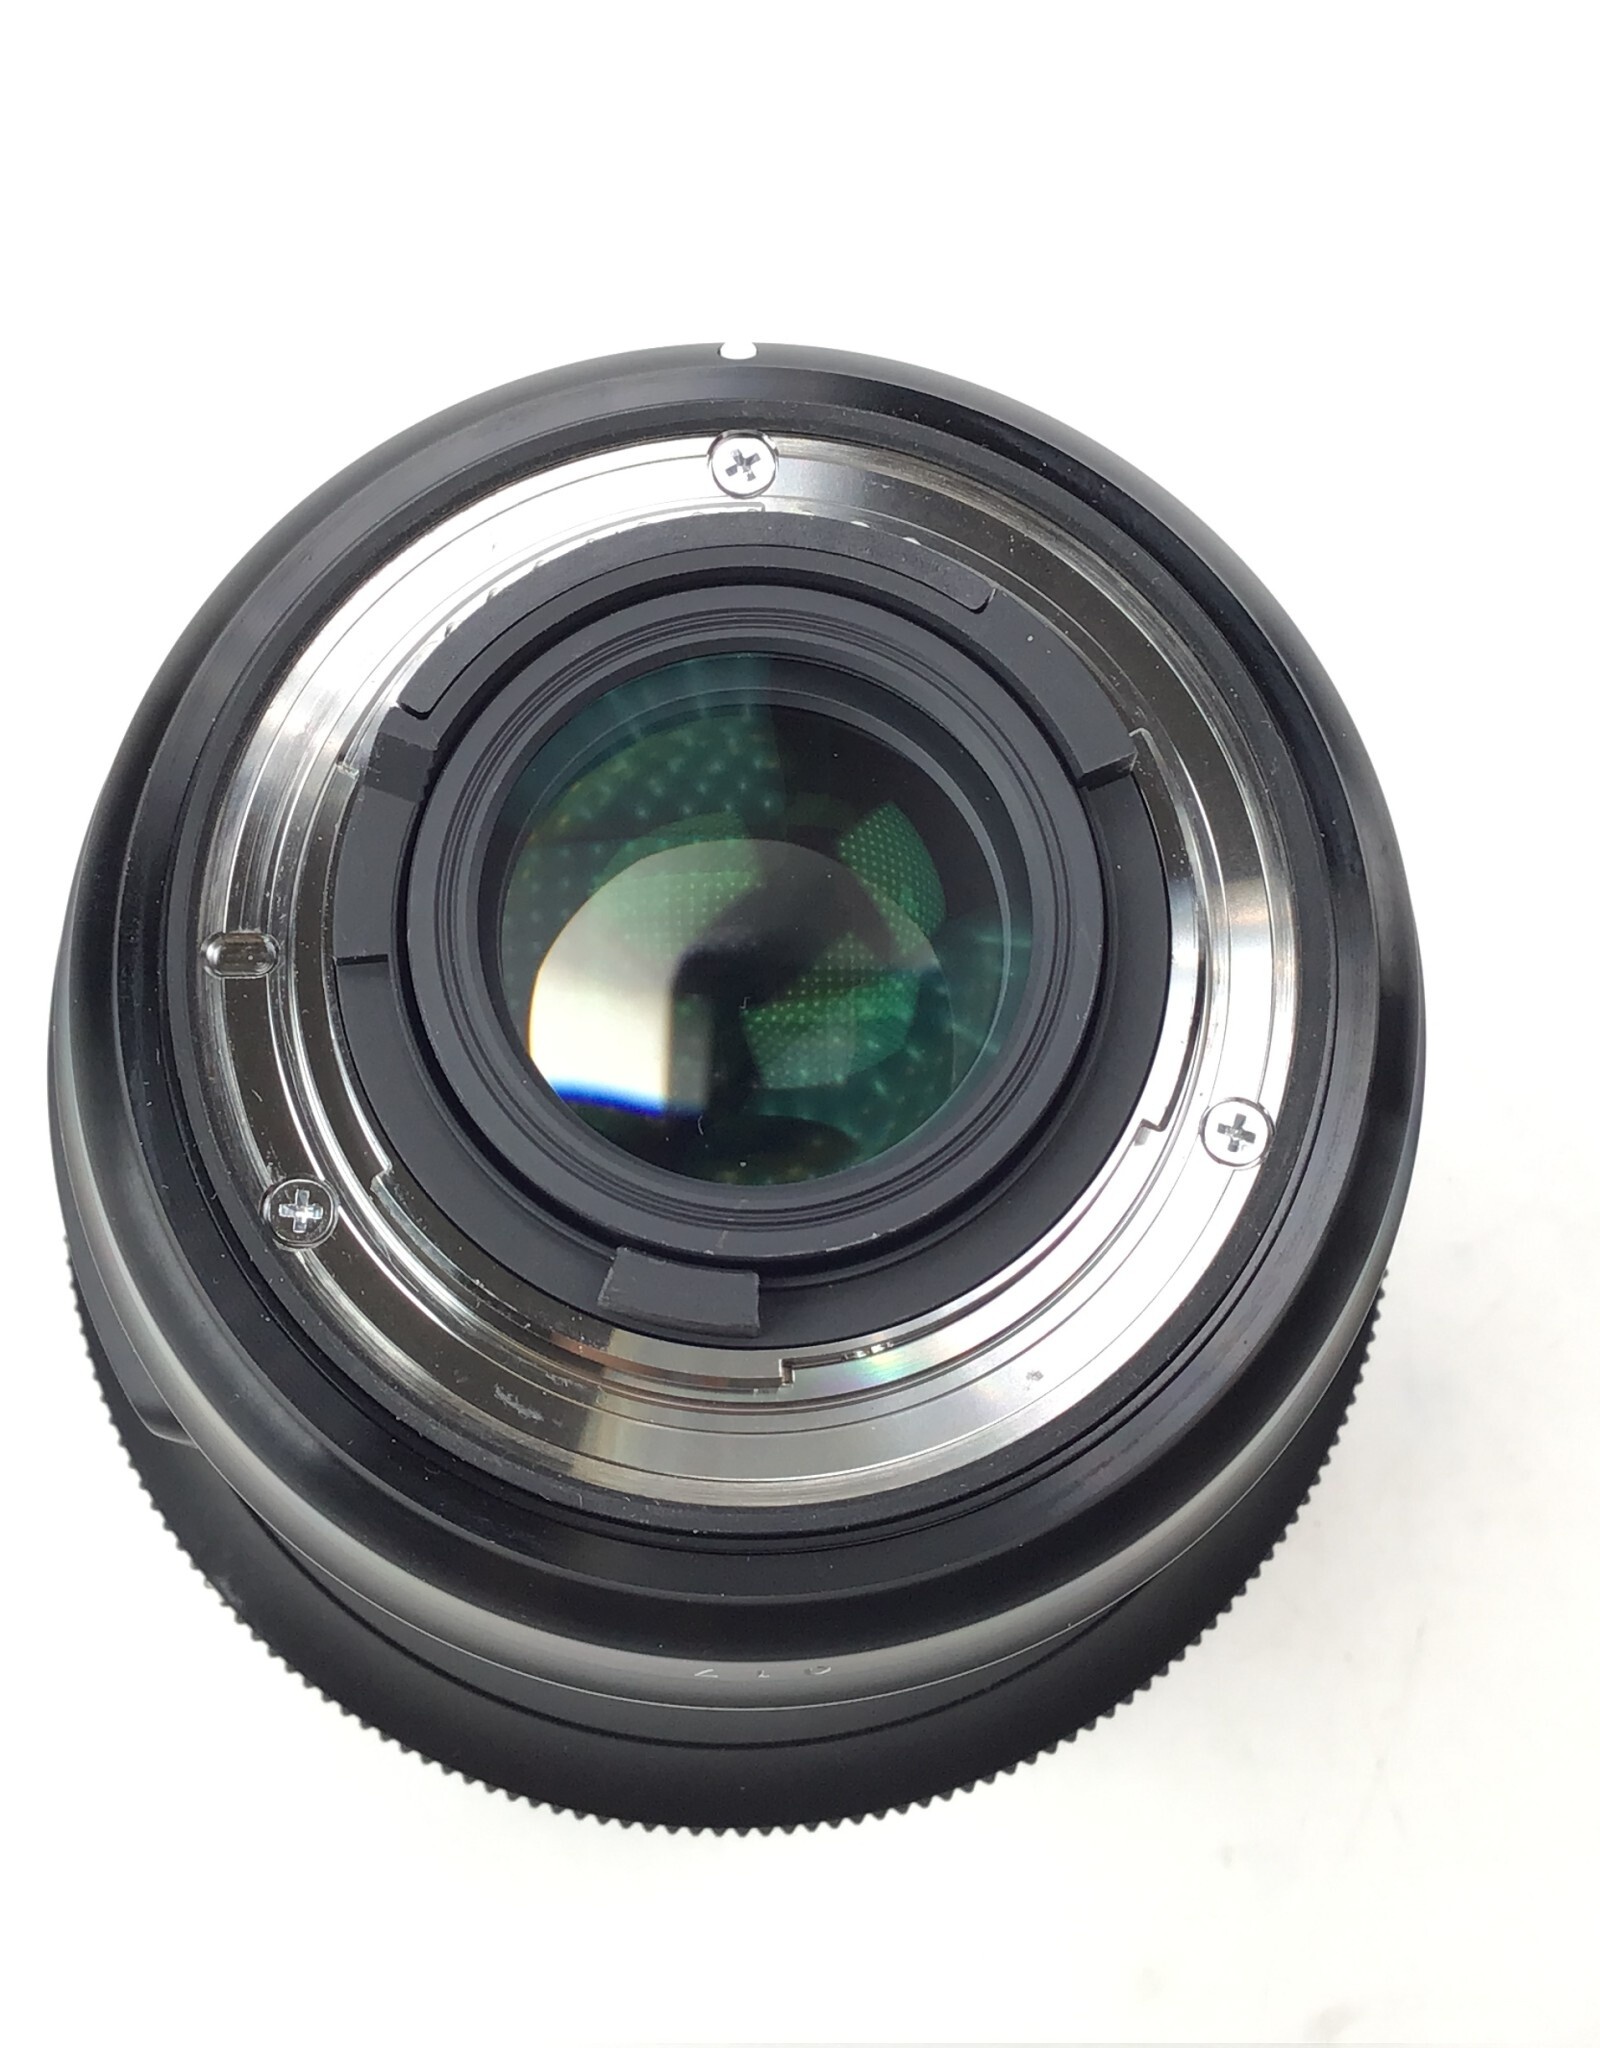 SIGMA Sigma Art 14mm f1.8 DG Lens for Nikon Used Good